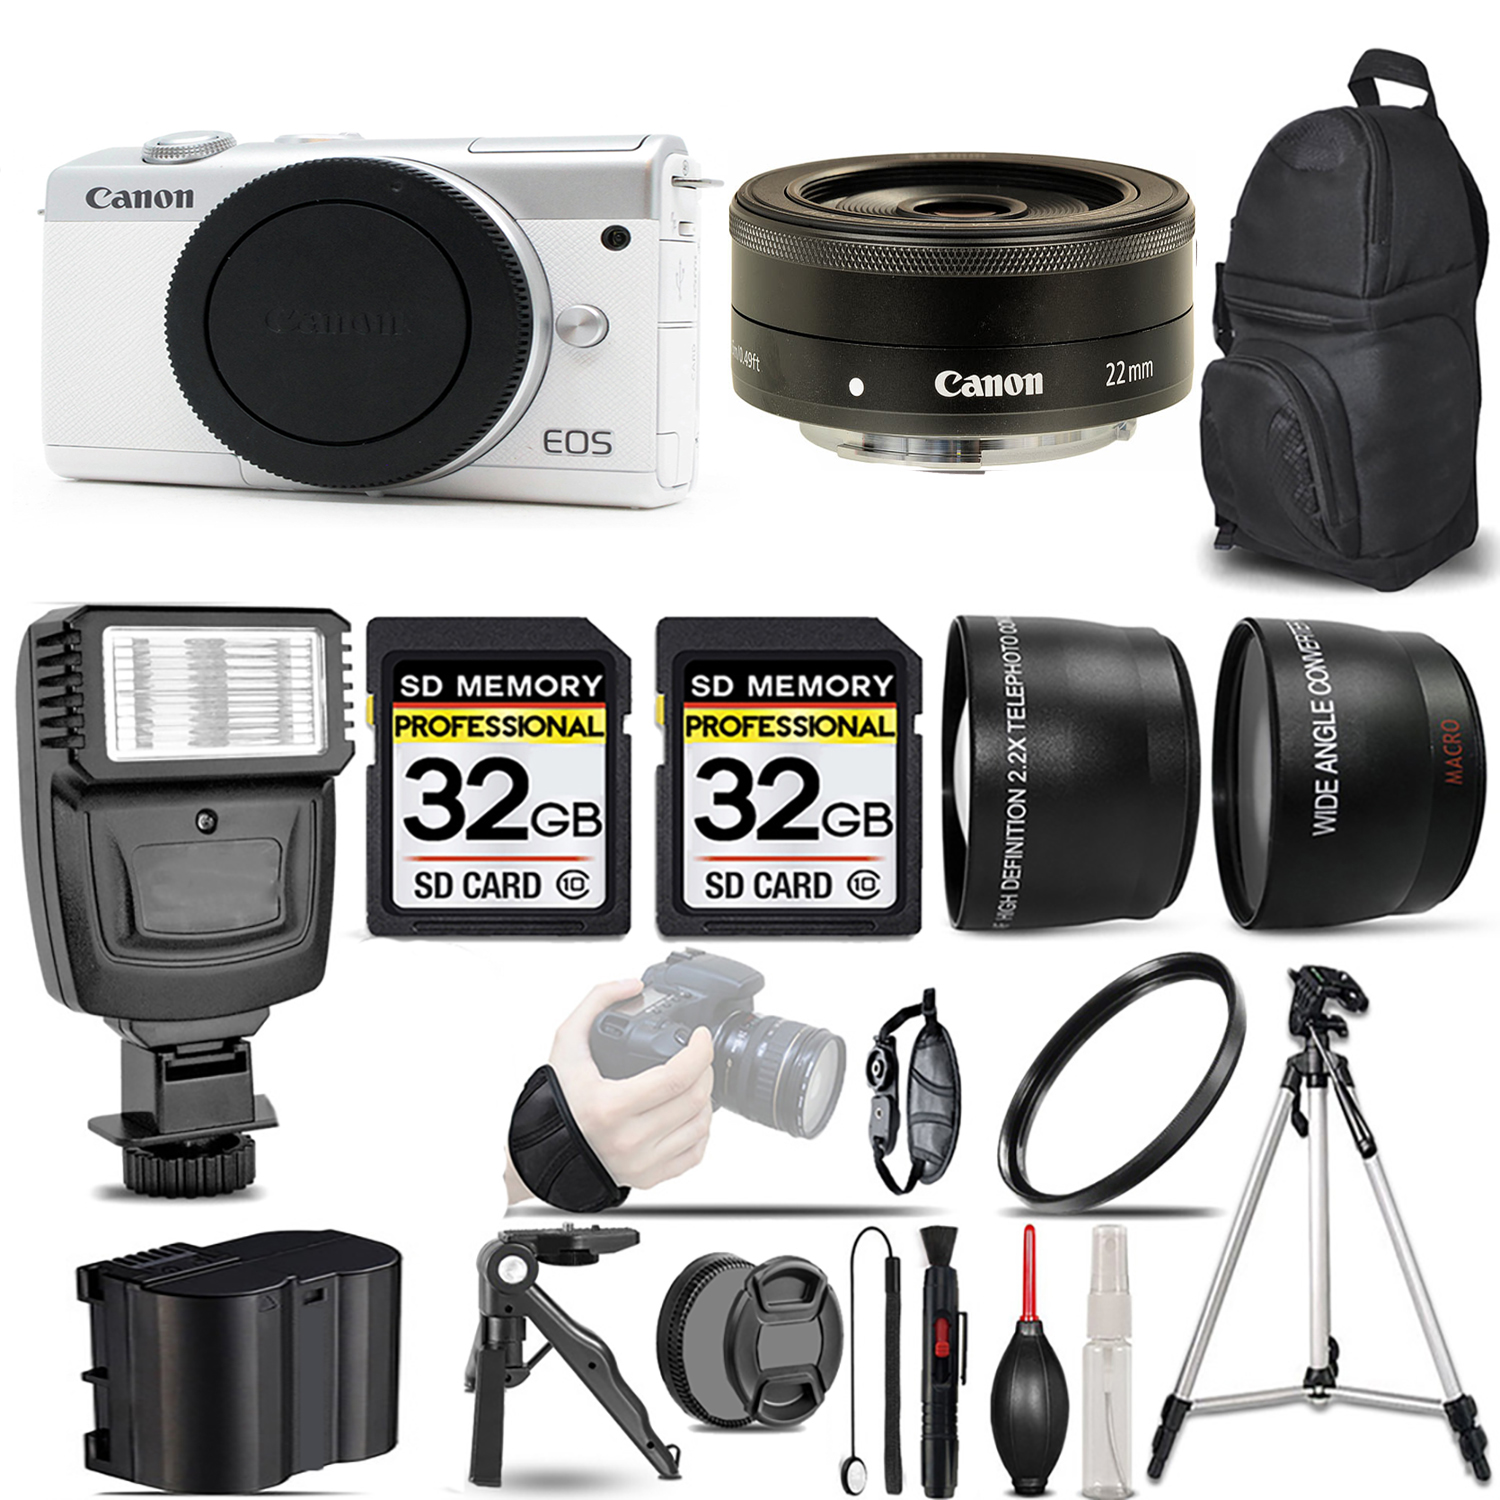 EOS M200  Camera (White) + 22mm f/2 STM Lens + Flash + 64GB - Kit *FREE SHIPPING*